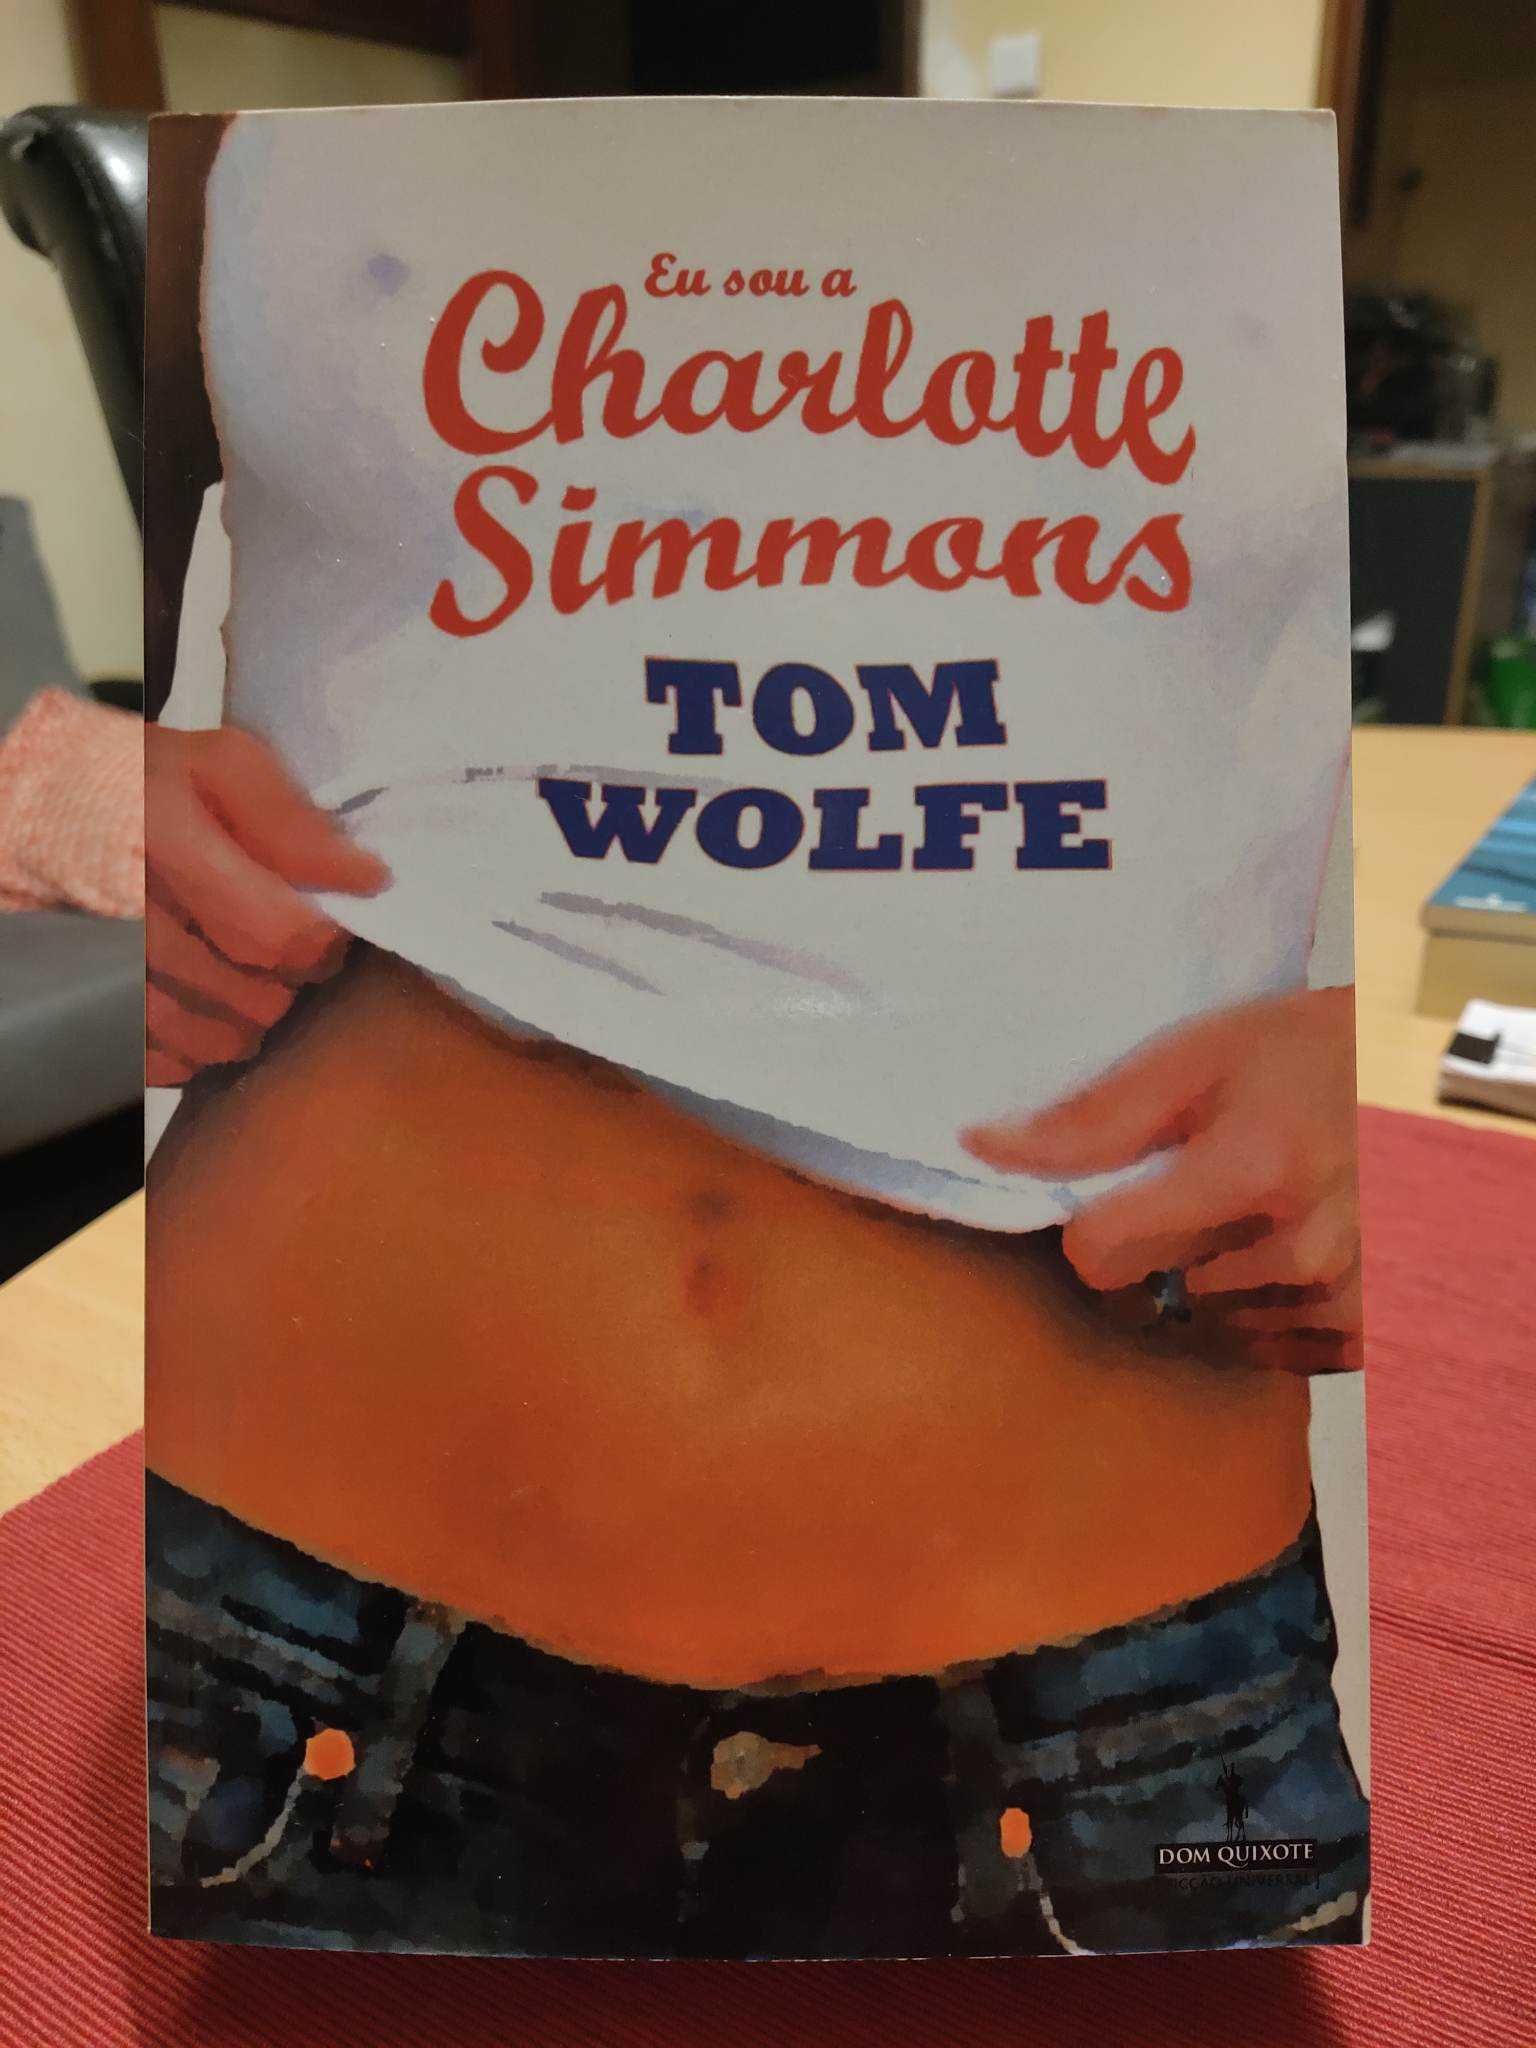 Livro “Eu sou a Charlotte Simmons”